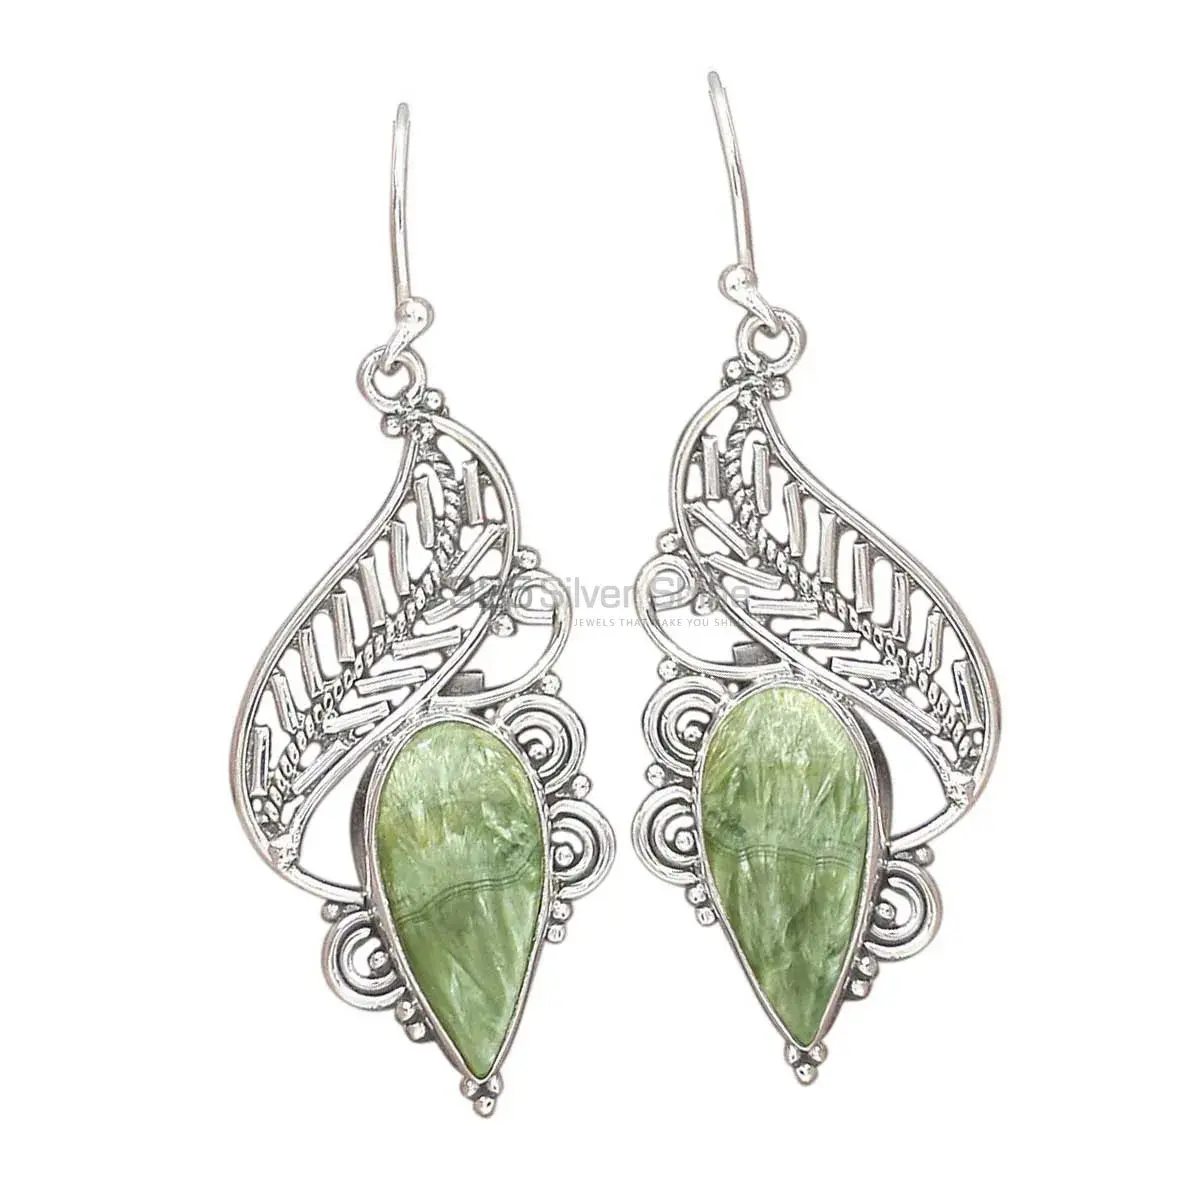 Affordable 925 Sterling Silver Handmade Earrings Exporters In Seraphinite Gemstone Jewelry 925SE2962